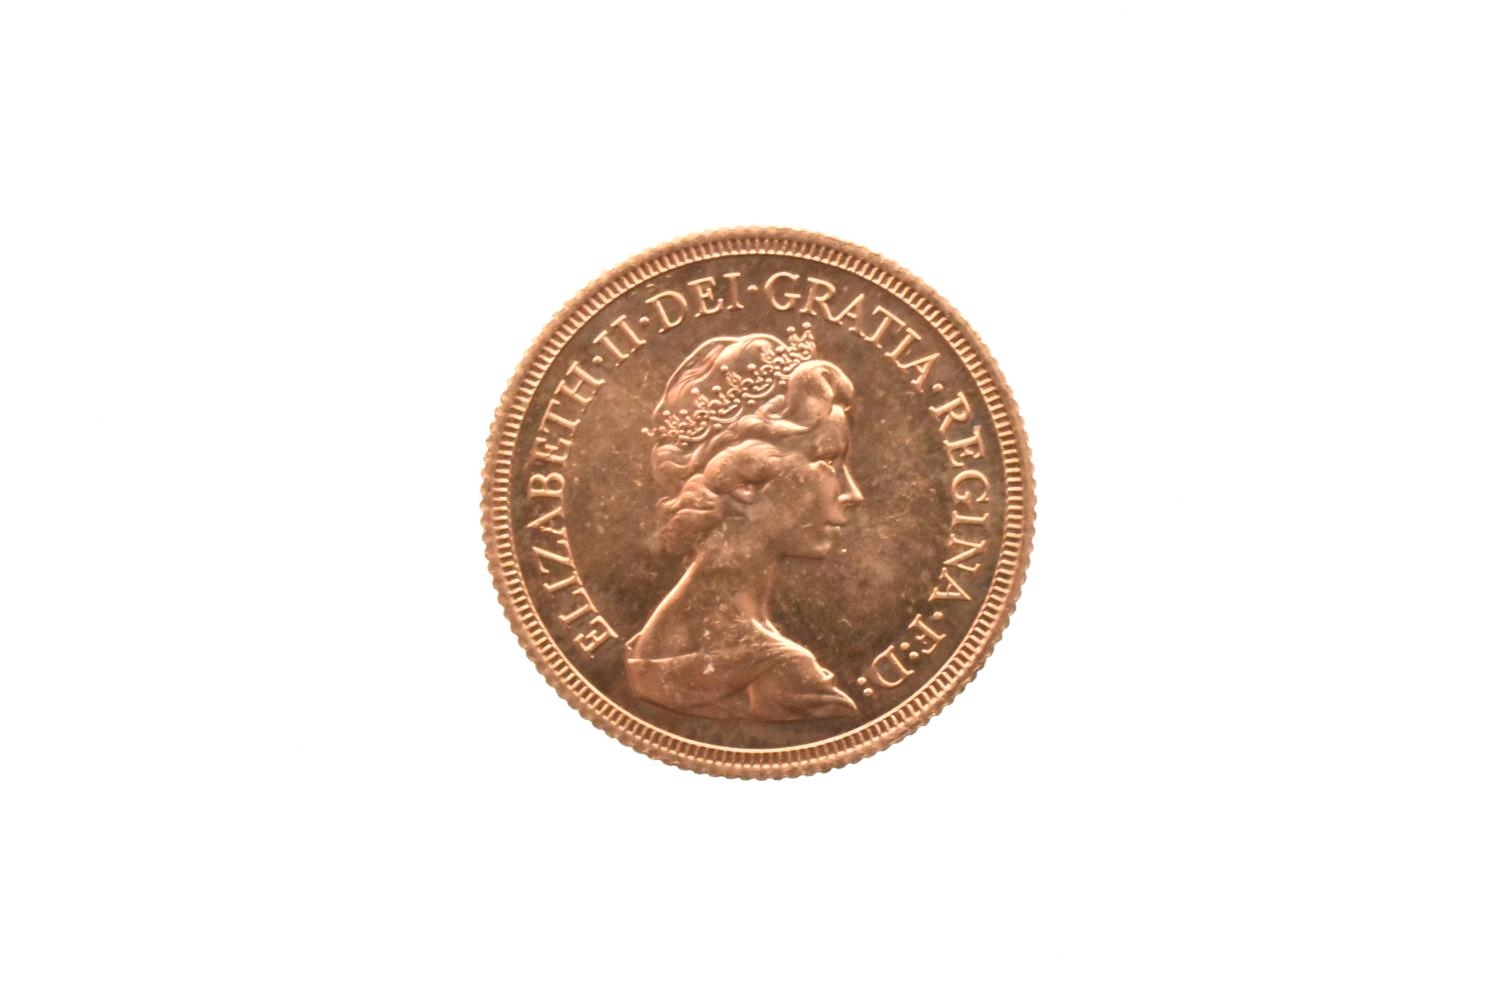 United Kingdom - Elizabeth II (1952-2022), Gold Sovereign, dated 1979, - Image 2 of 2